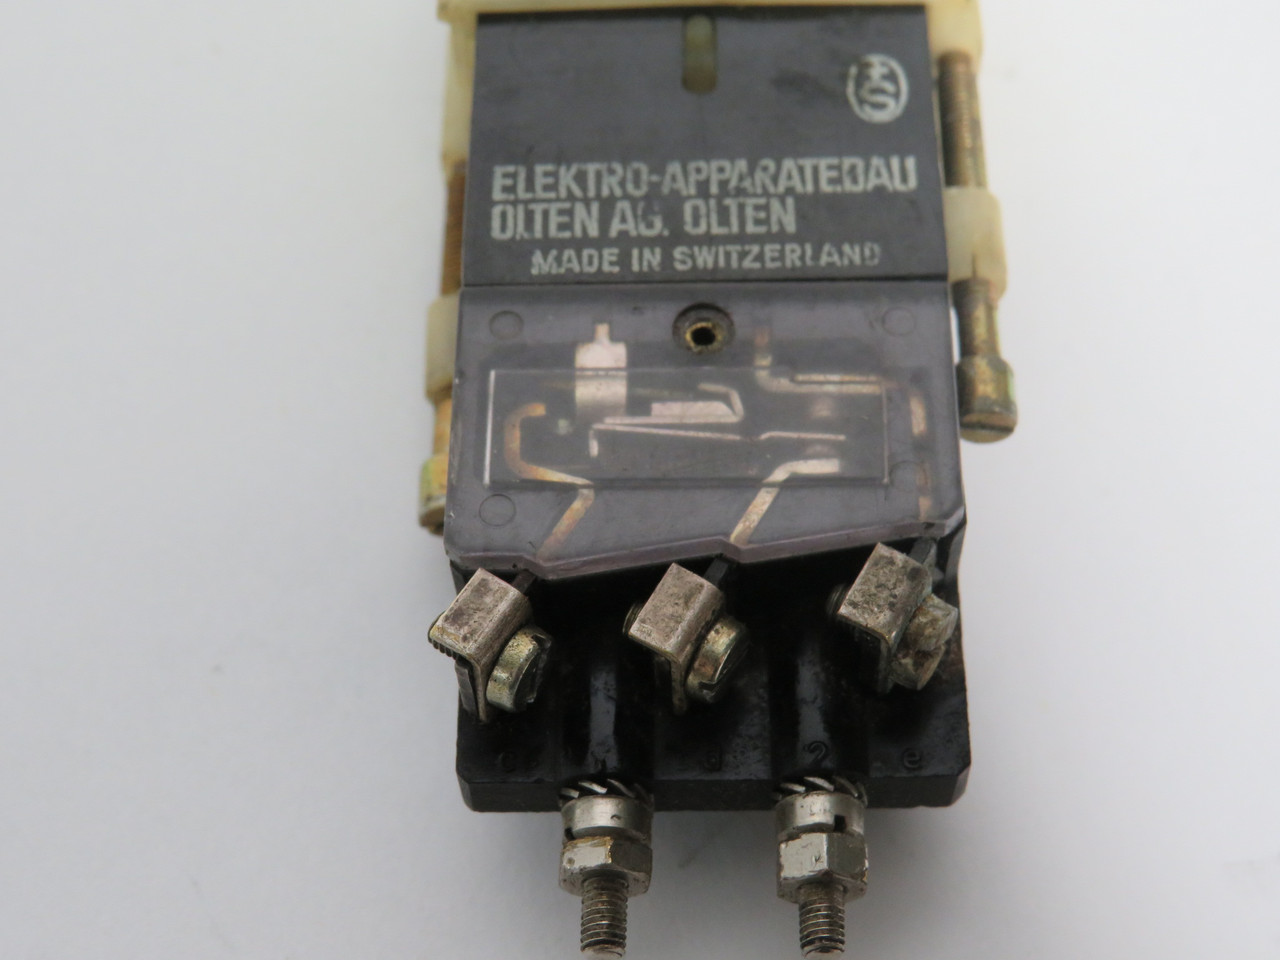 Elektro-Apparatedau 02-121 Panel Mount Illuminated Push Button 10A@380VAC USED